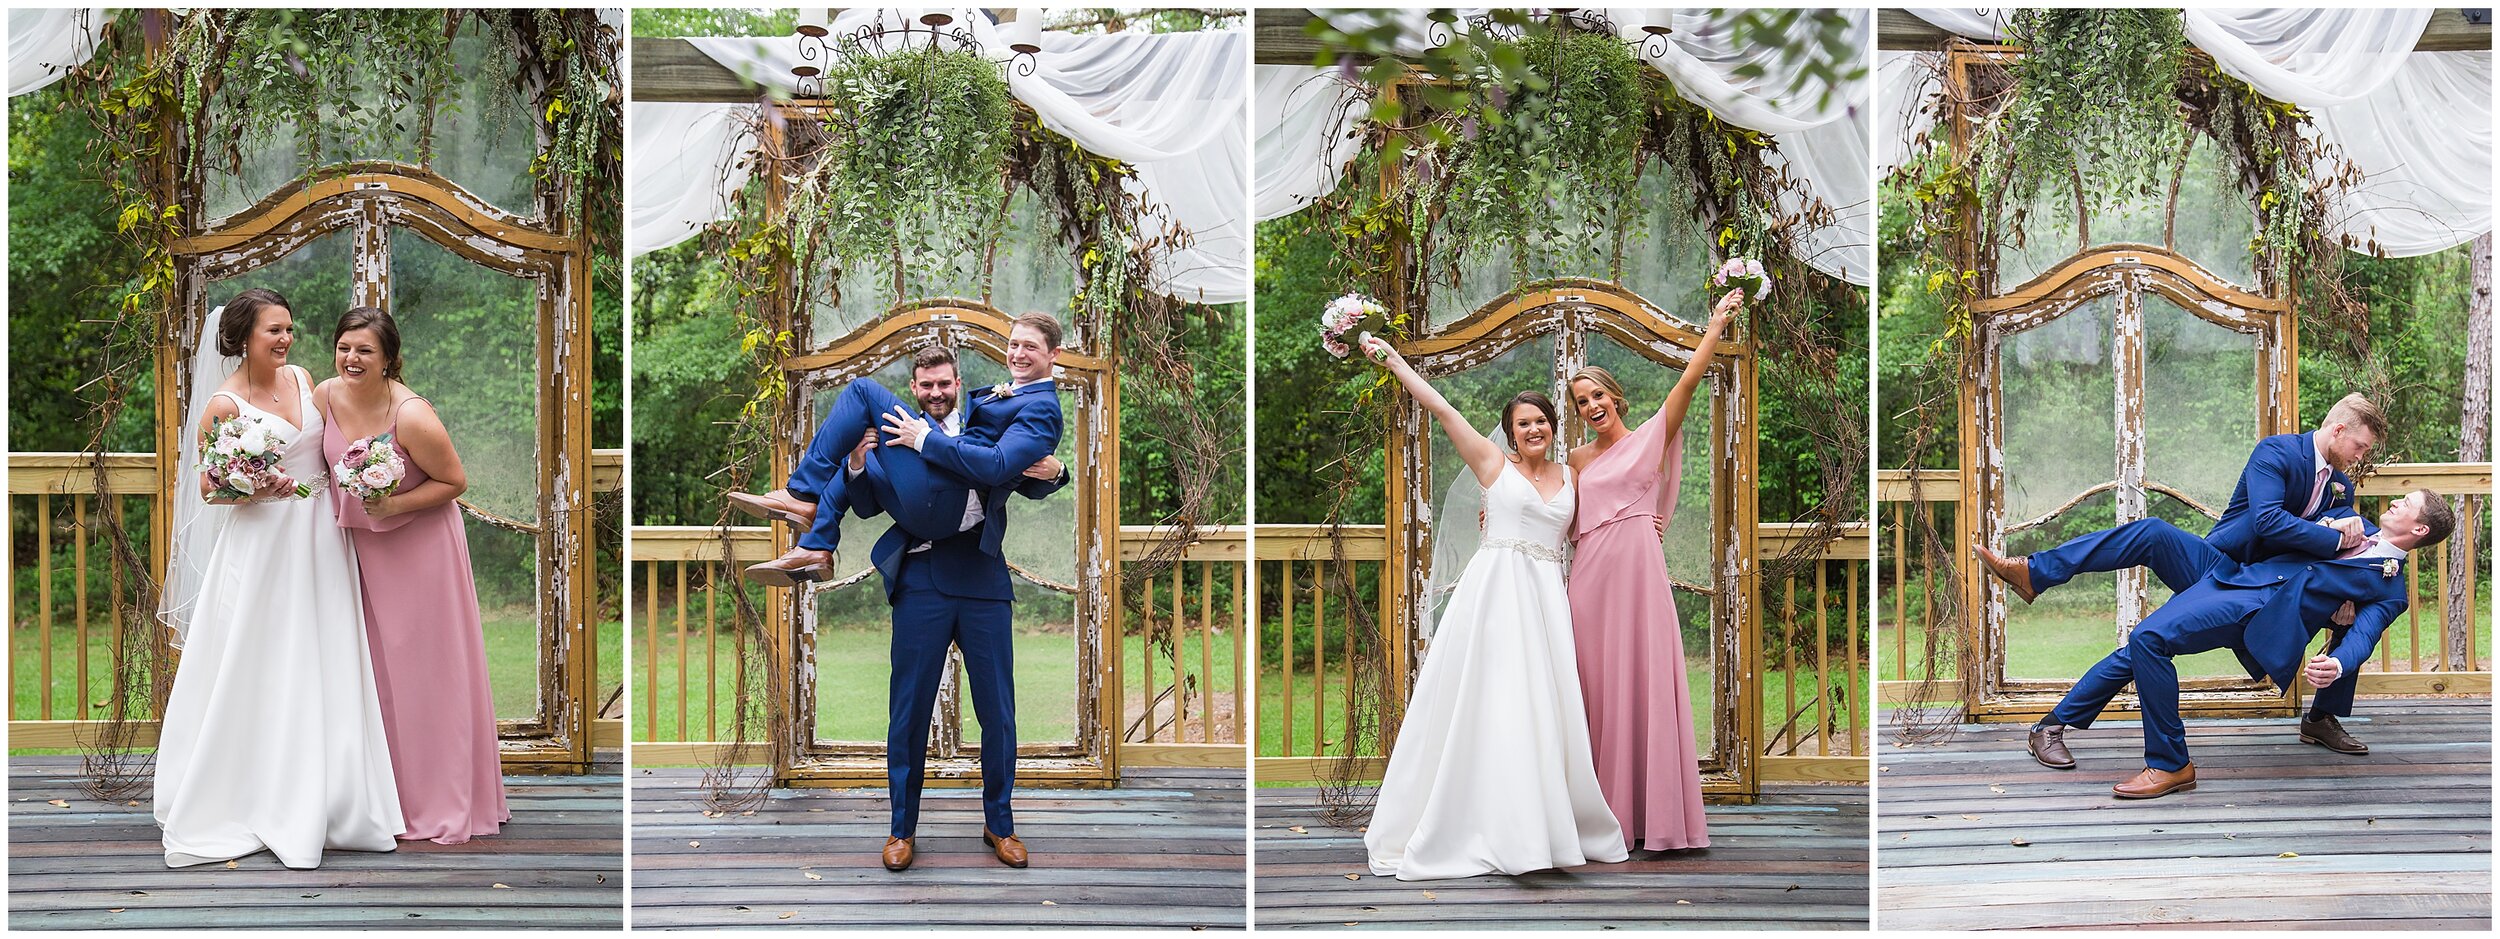 fun photos of bride and groom with bridesmaids and groomsmen at bella sera gardens